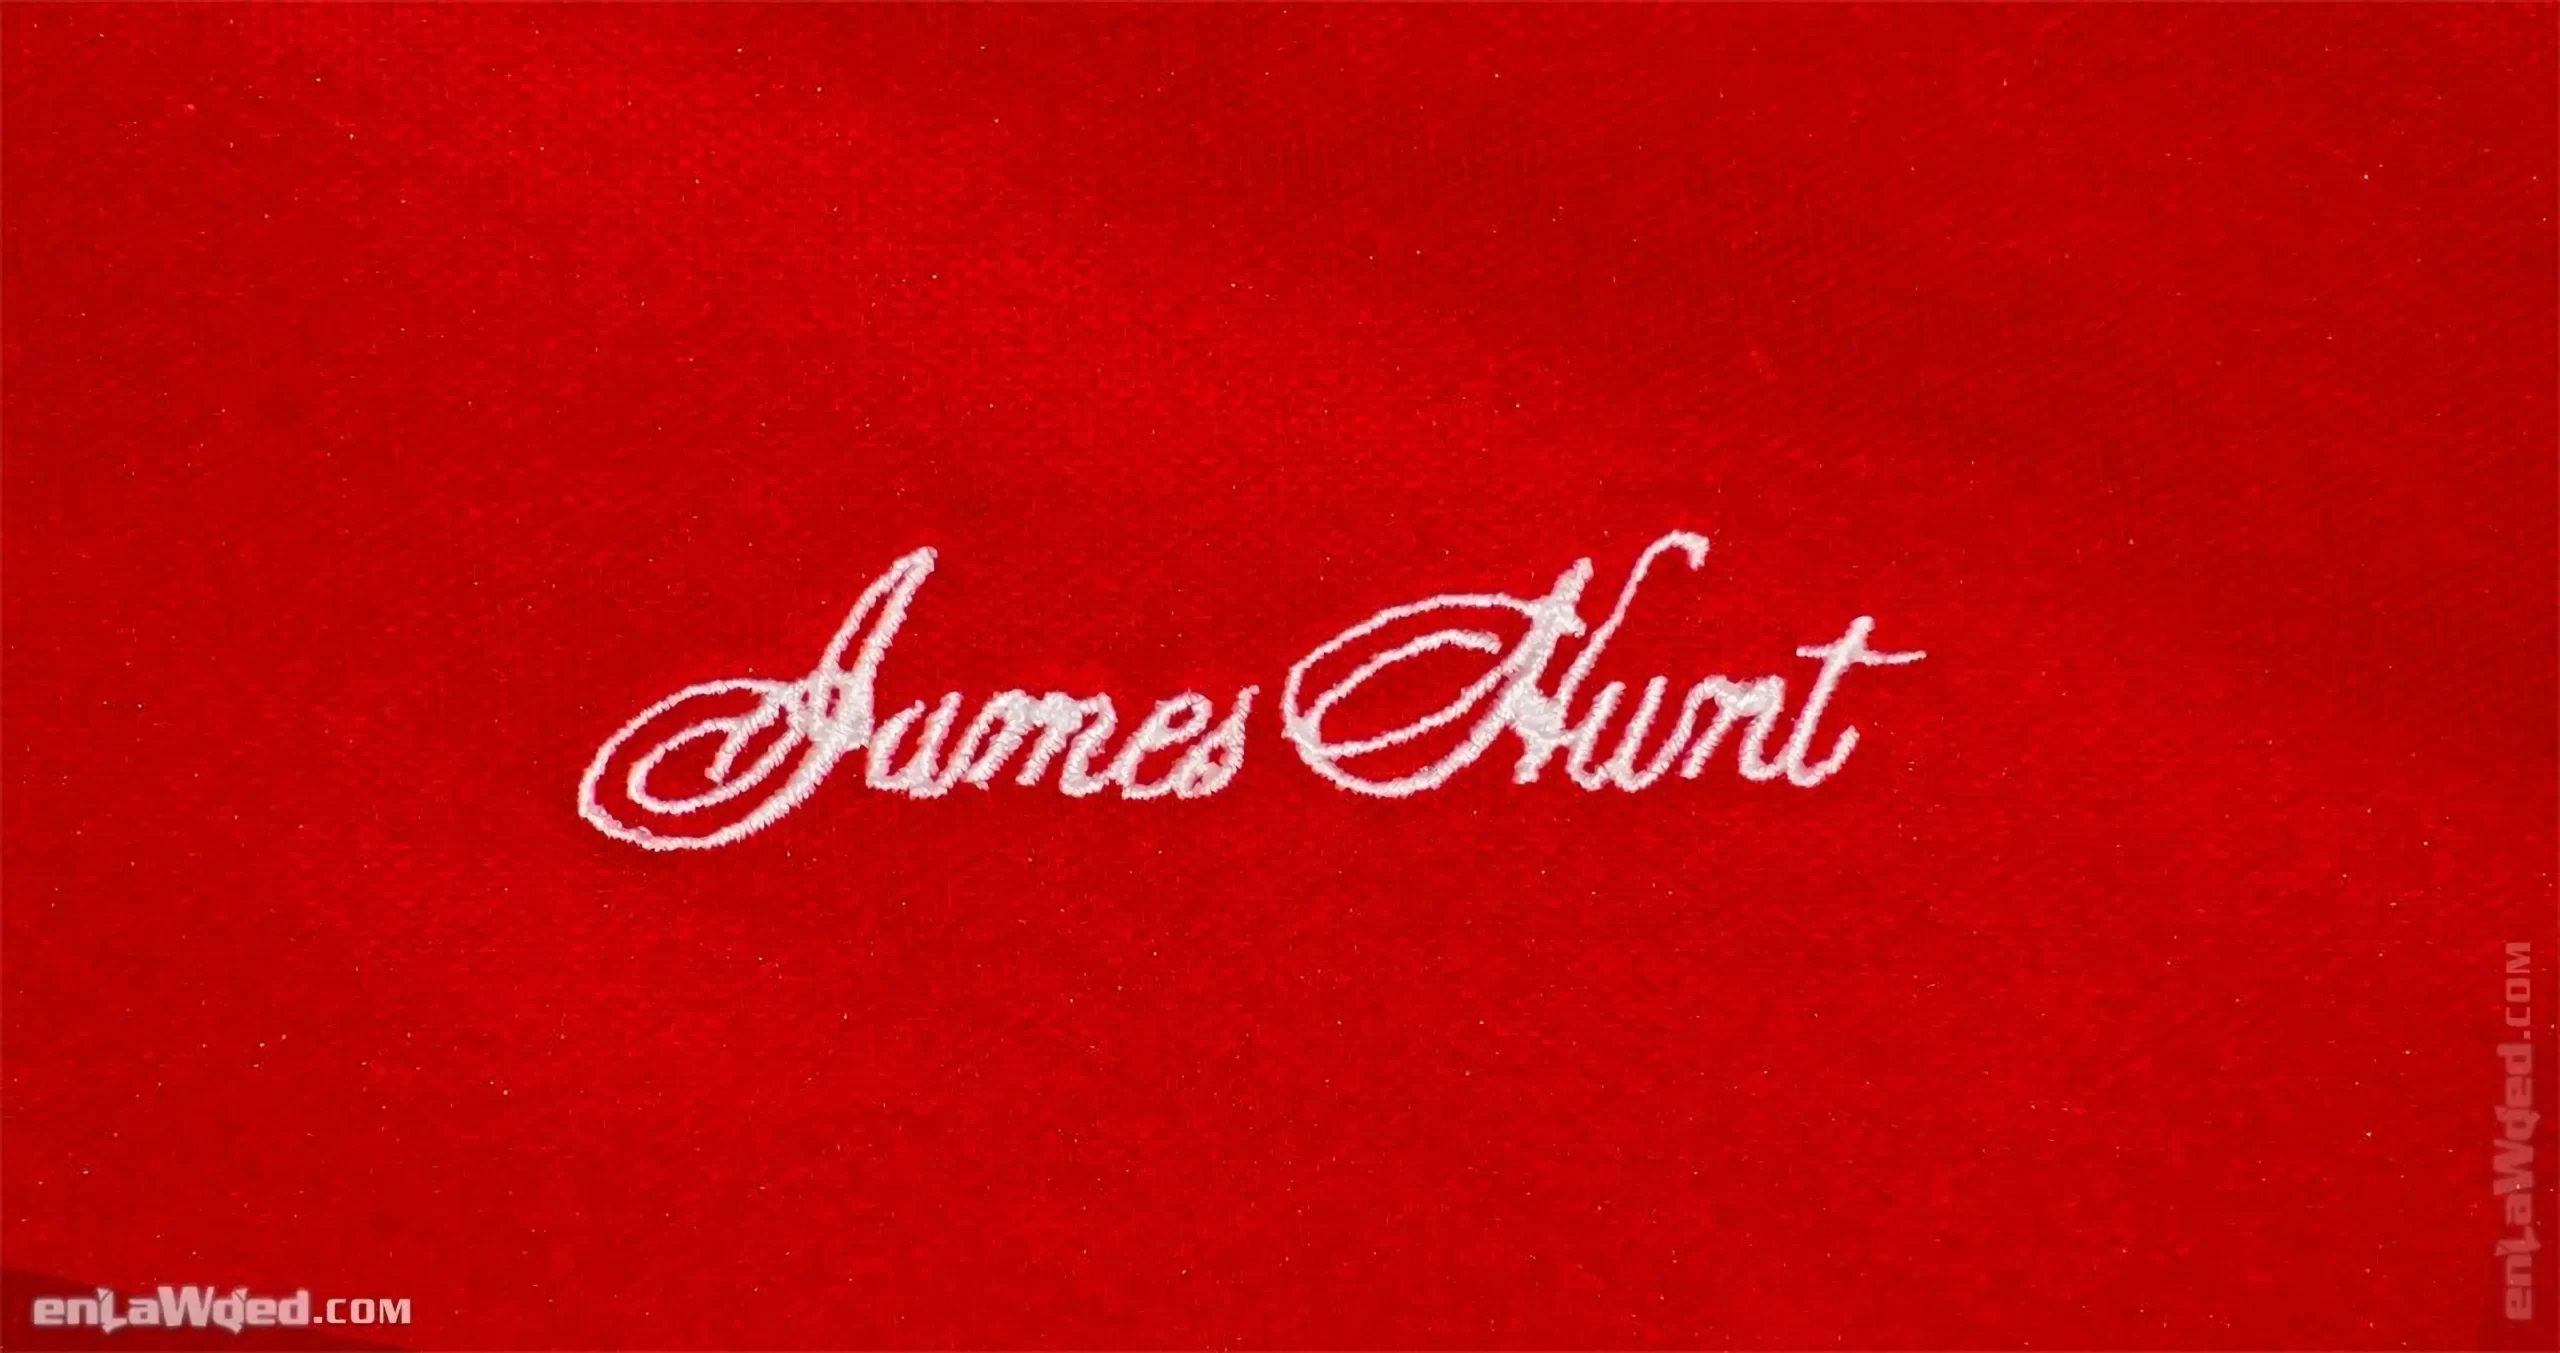 Men's 2006 James Hunt Player's Club TT by Adidas: Sexy (EnLawded.com file #lmchk90296ip2y124293kg9st)